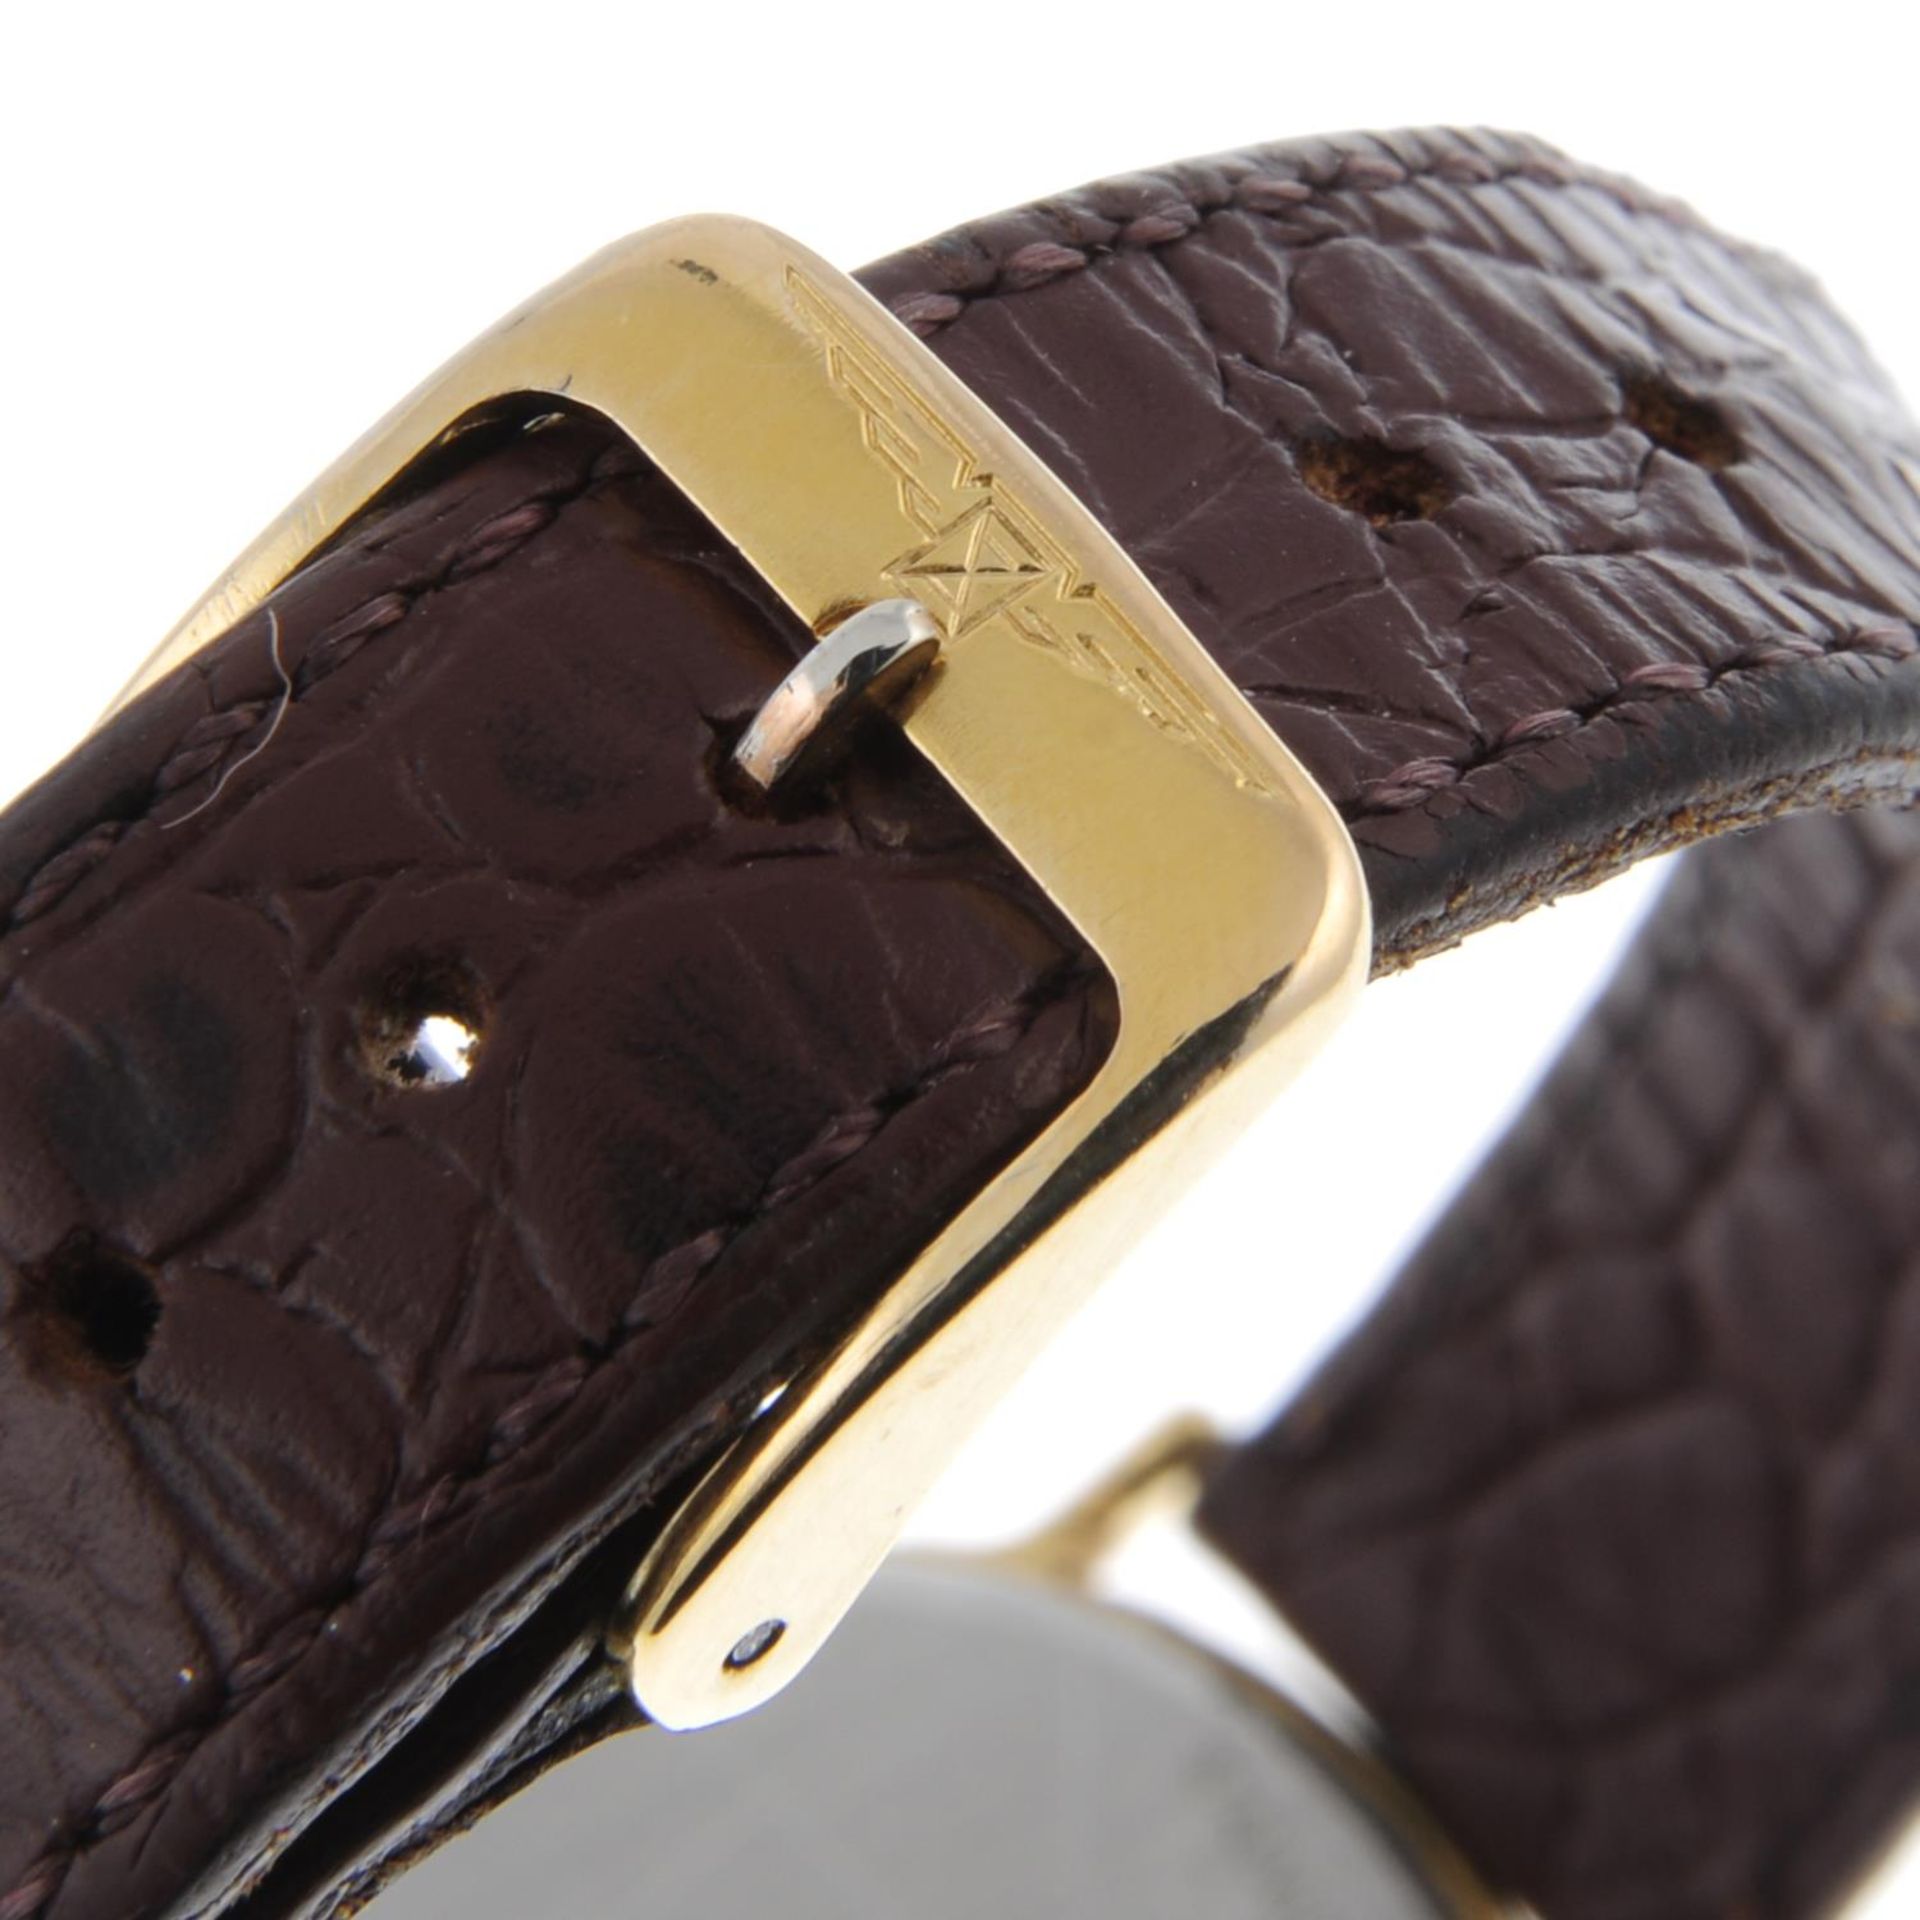 LONGINES - a gentleman's wrist watch. - Image 3 of 4